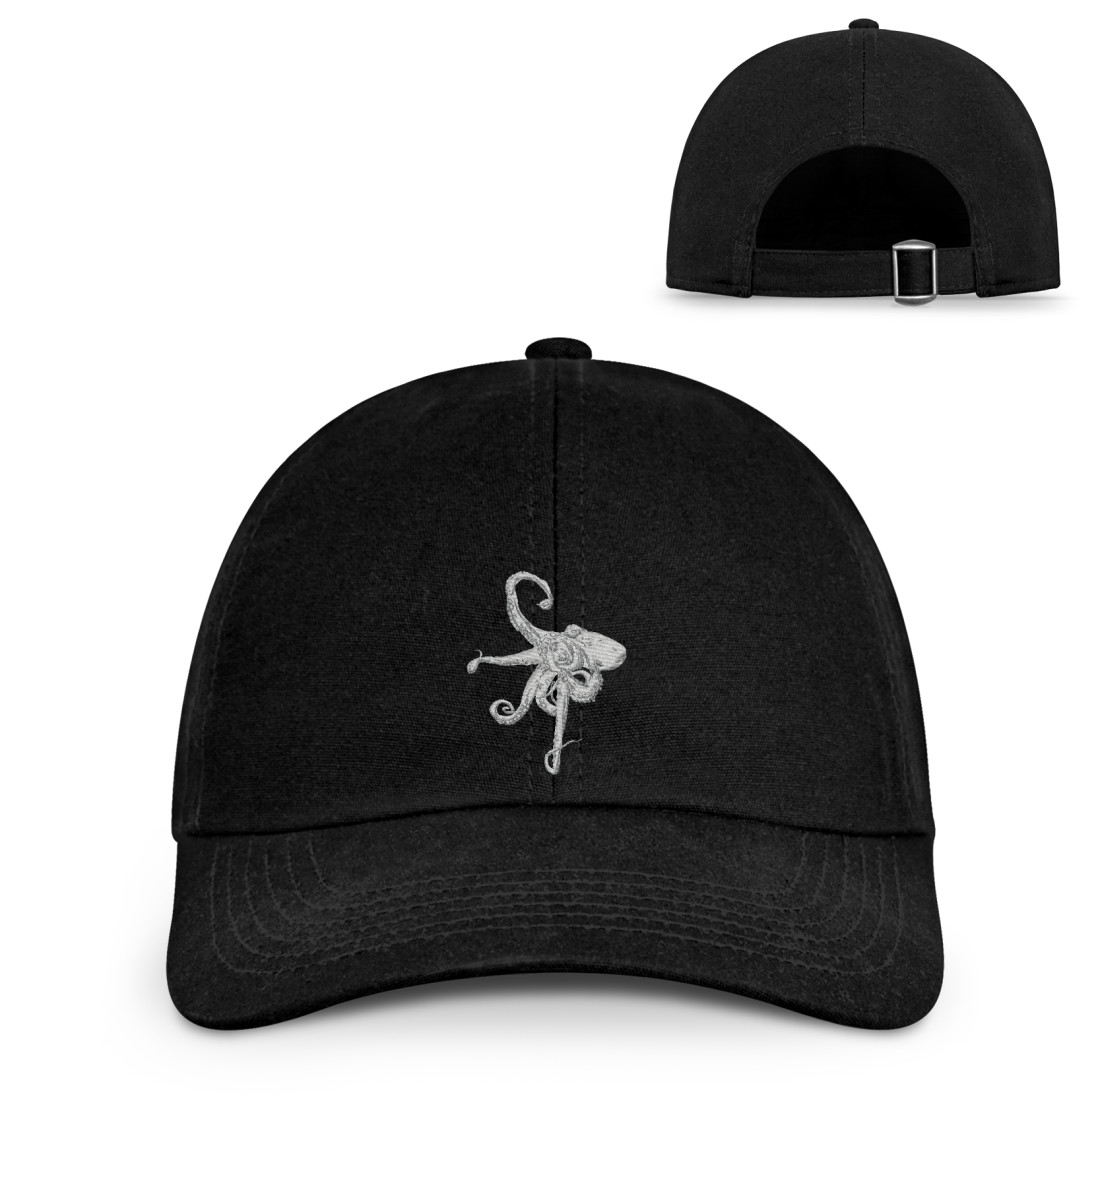 OCTOPUS CAP EMBROIDERED - Organic Baseball Kappe mit Stick-16